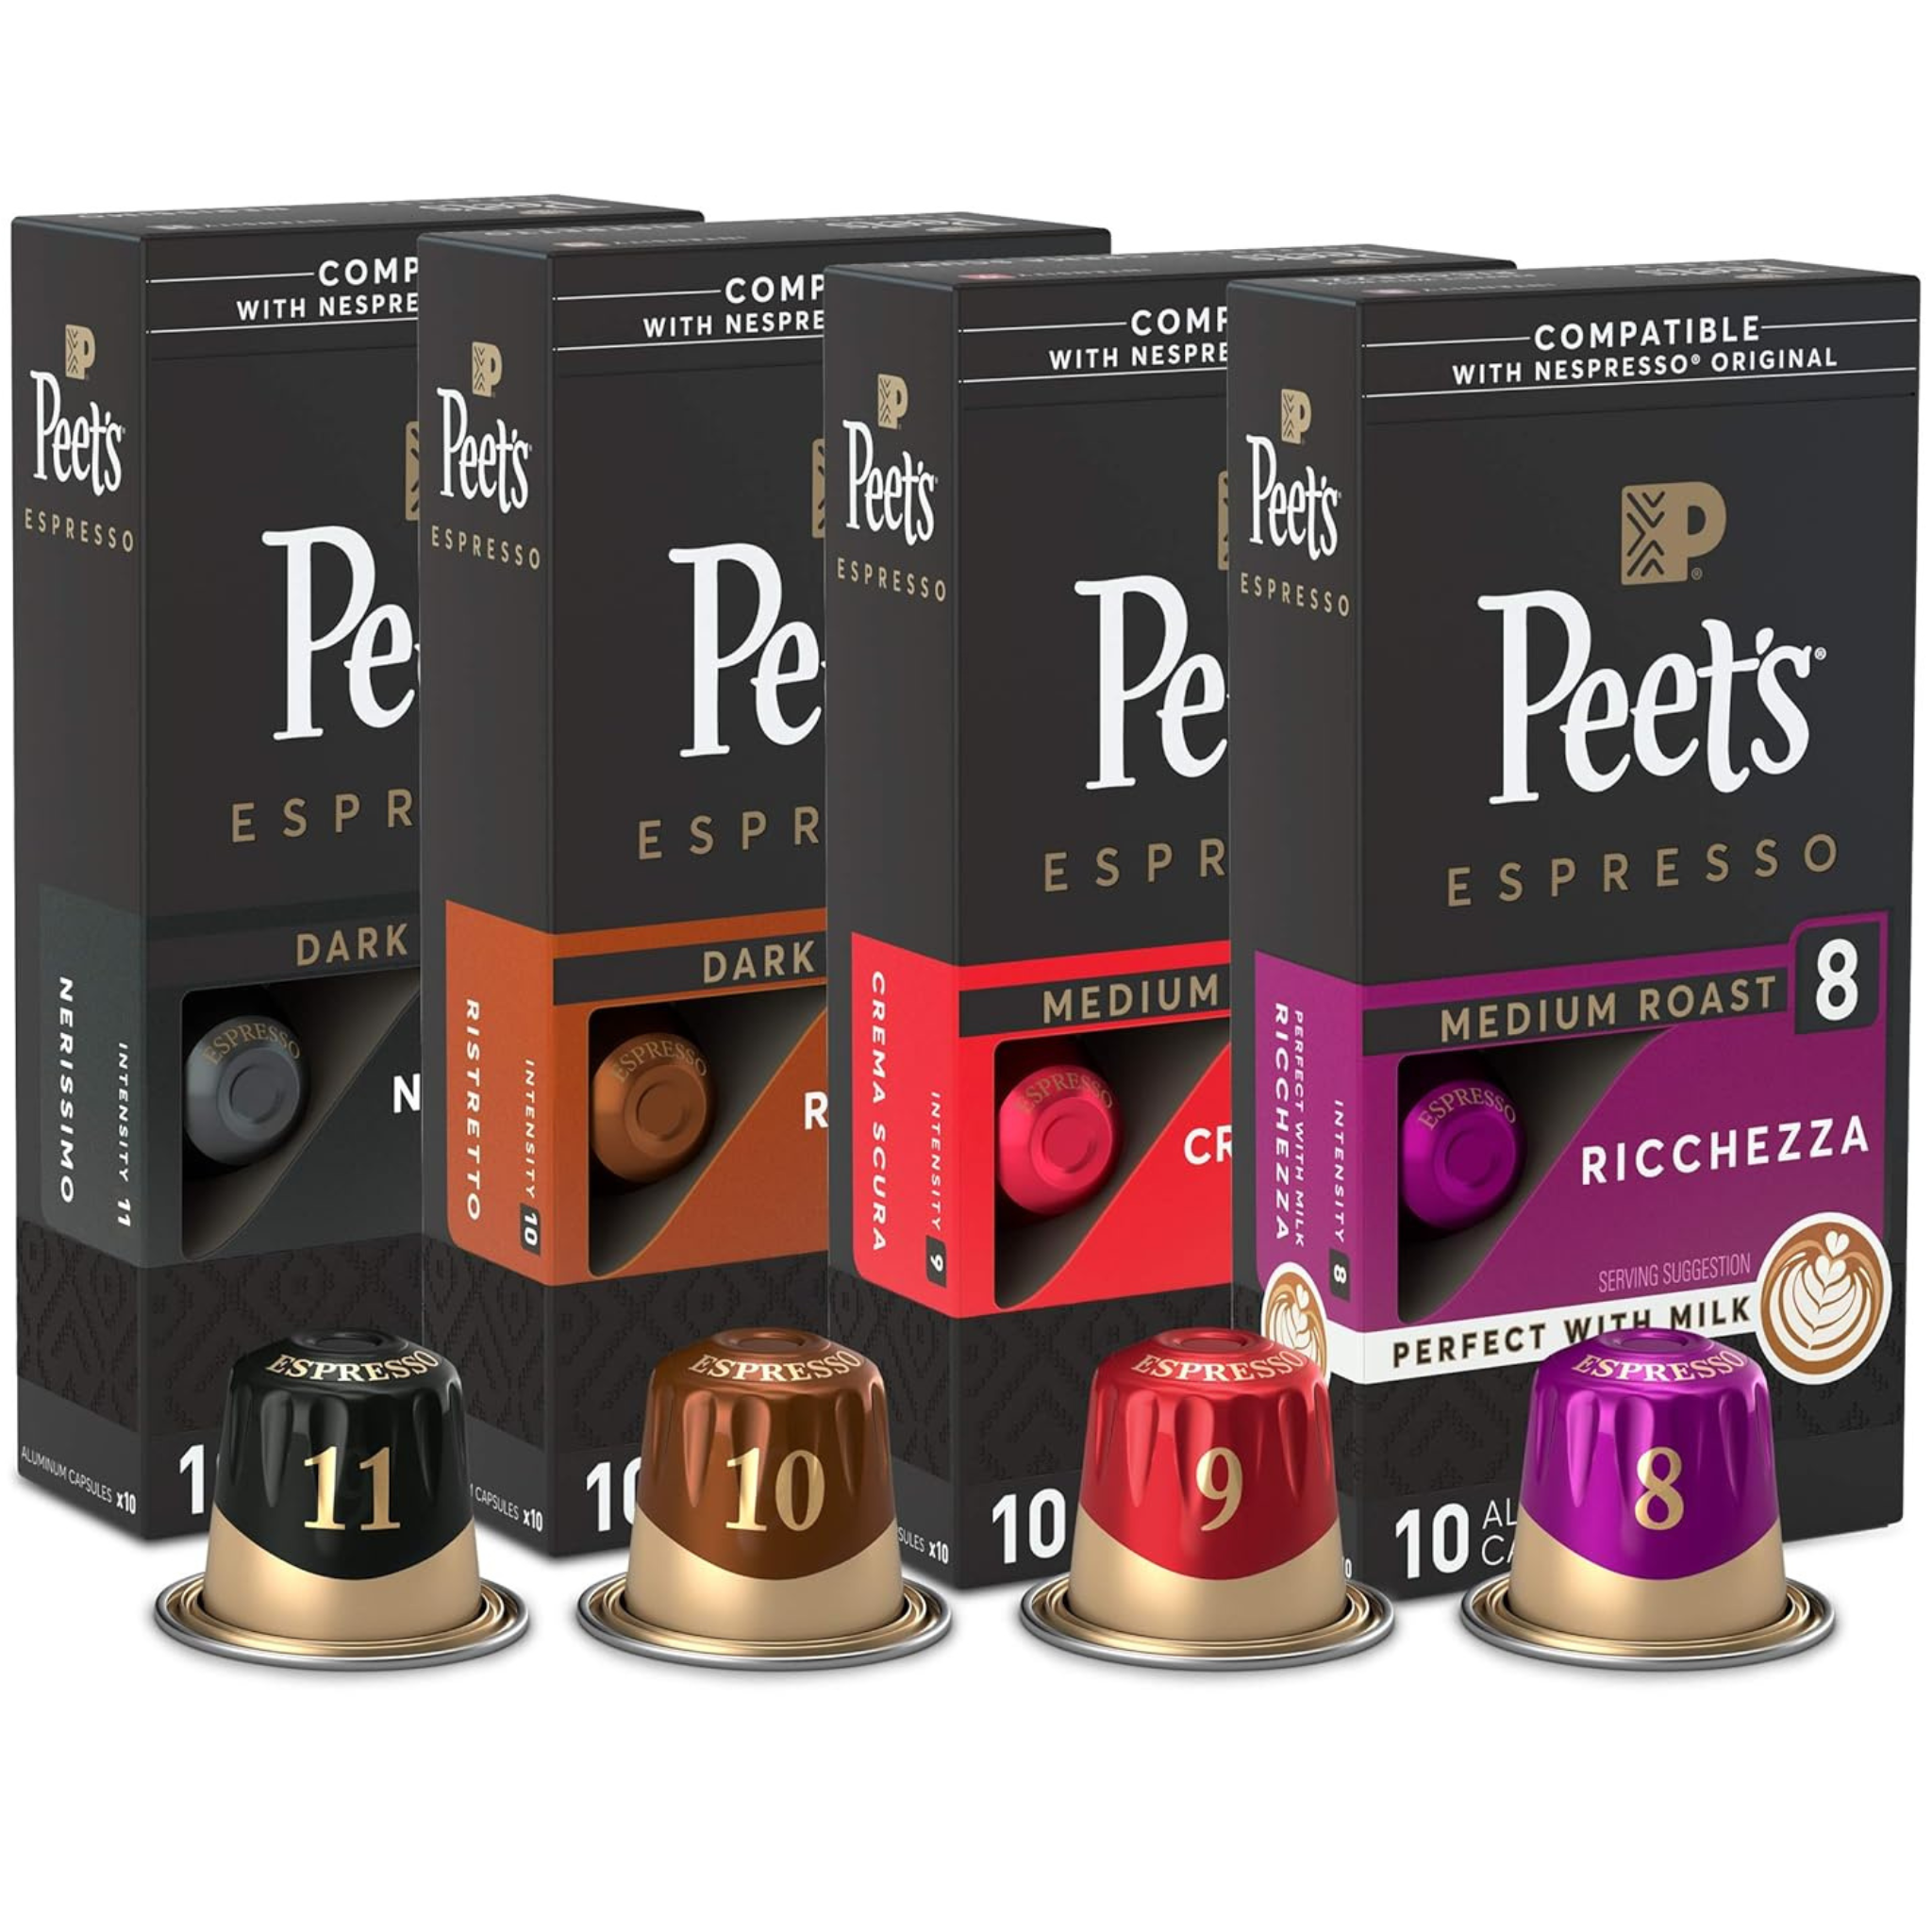 40 Peet’s Coffee Espresso Coffee Nespresso Pods Variety Pack